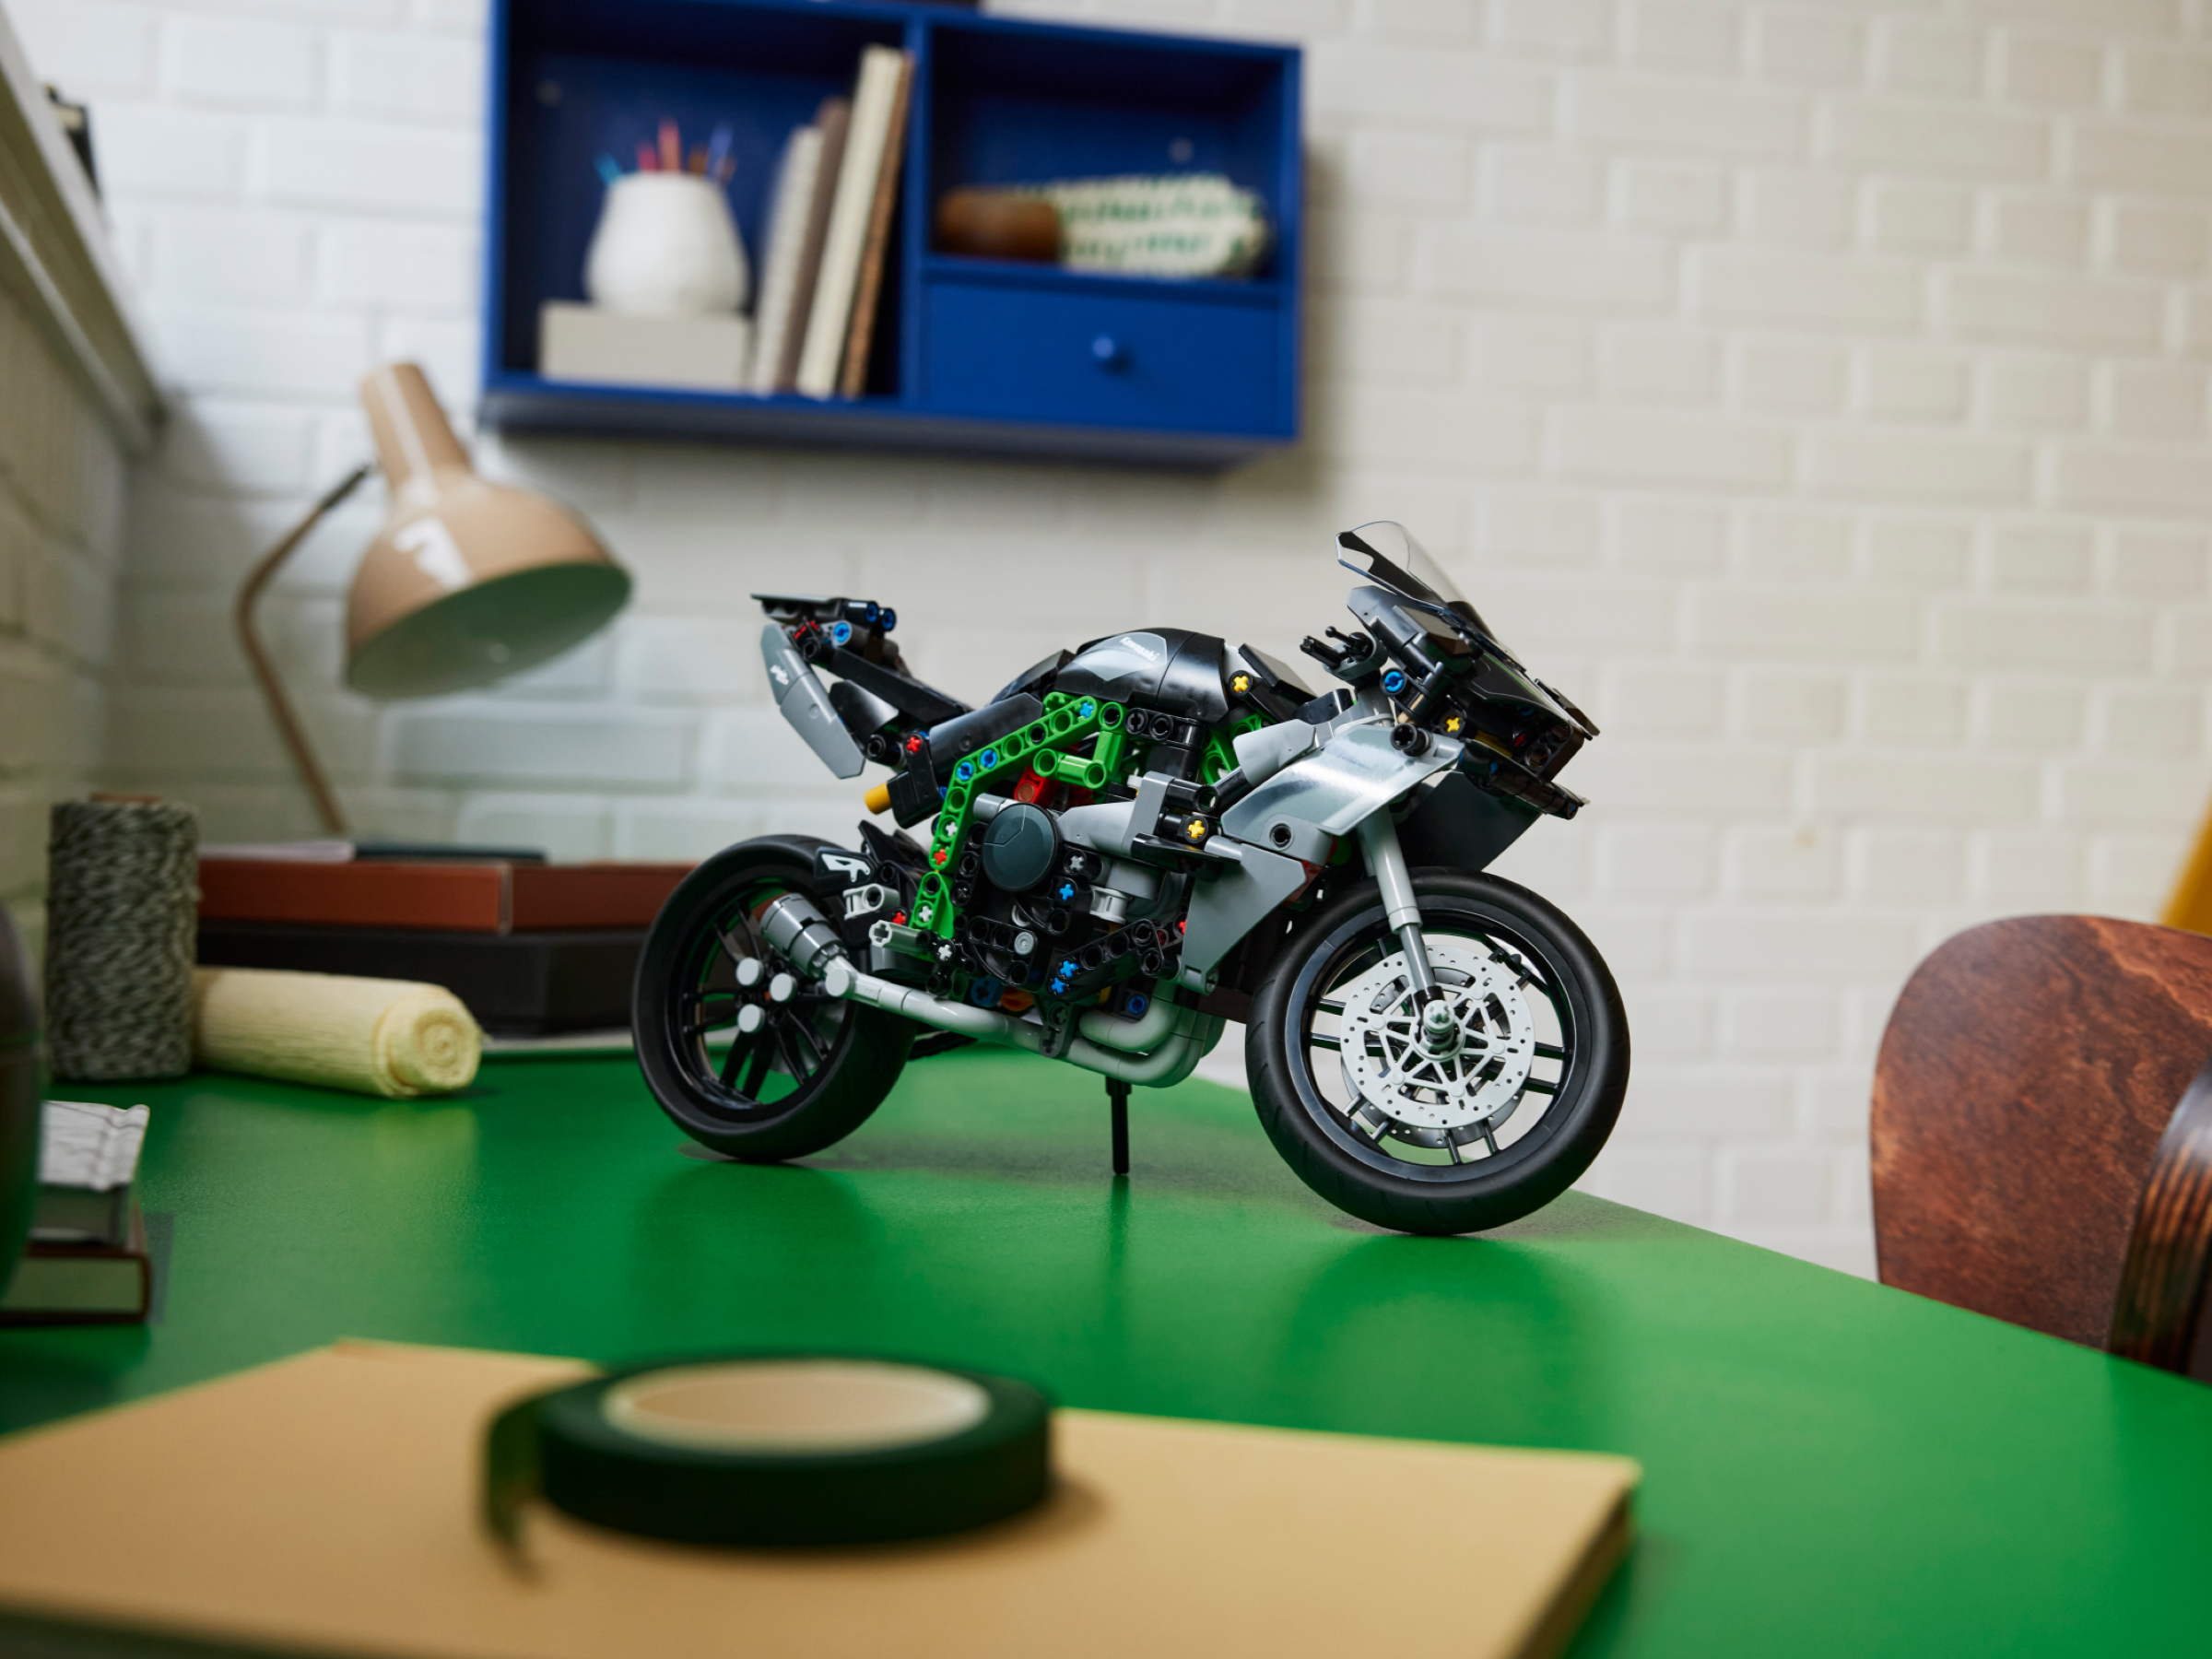 Lego motorcycle Kawasaki ninja H2R motorcycle difficult mechanical model  MOC series assembled building blocks toy male